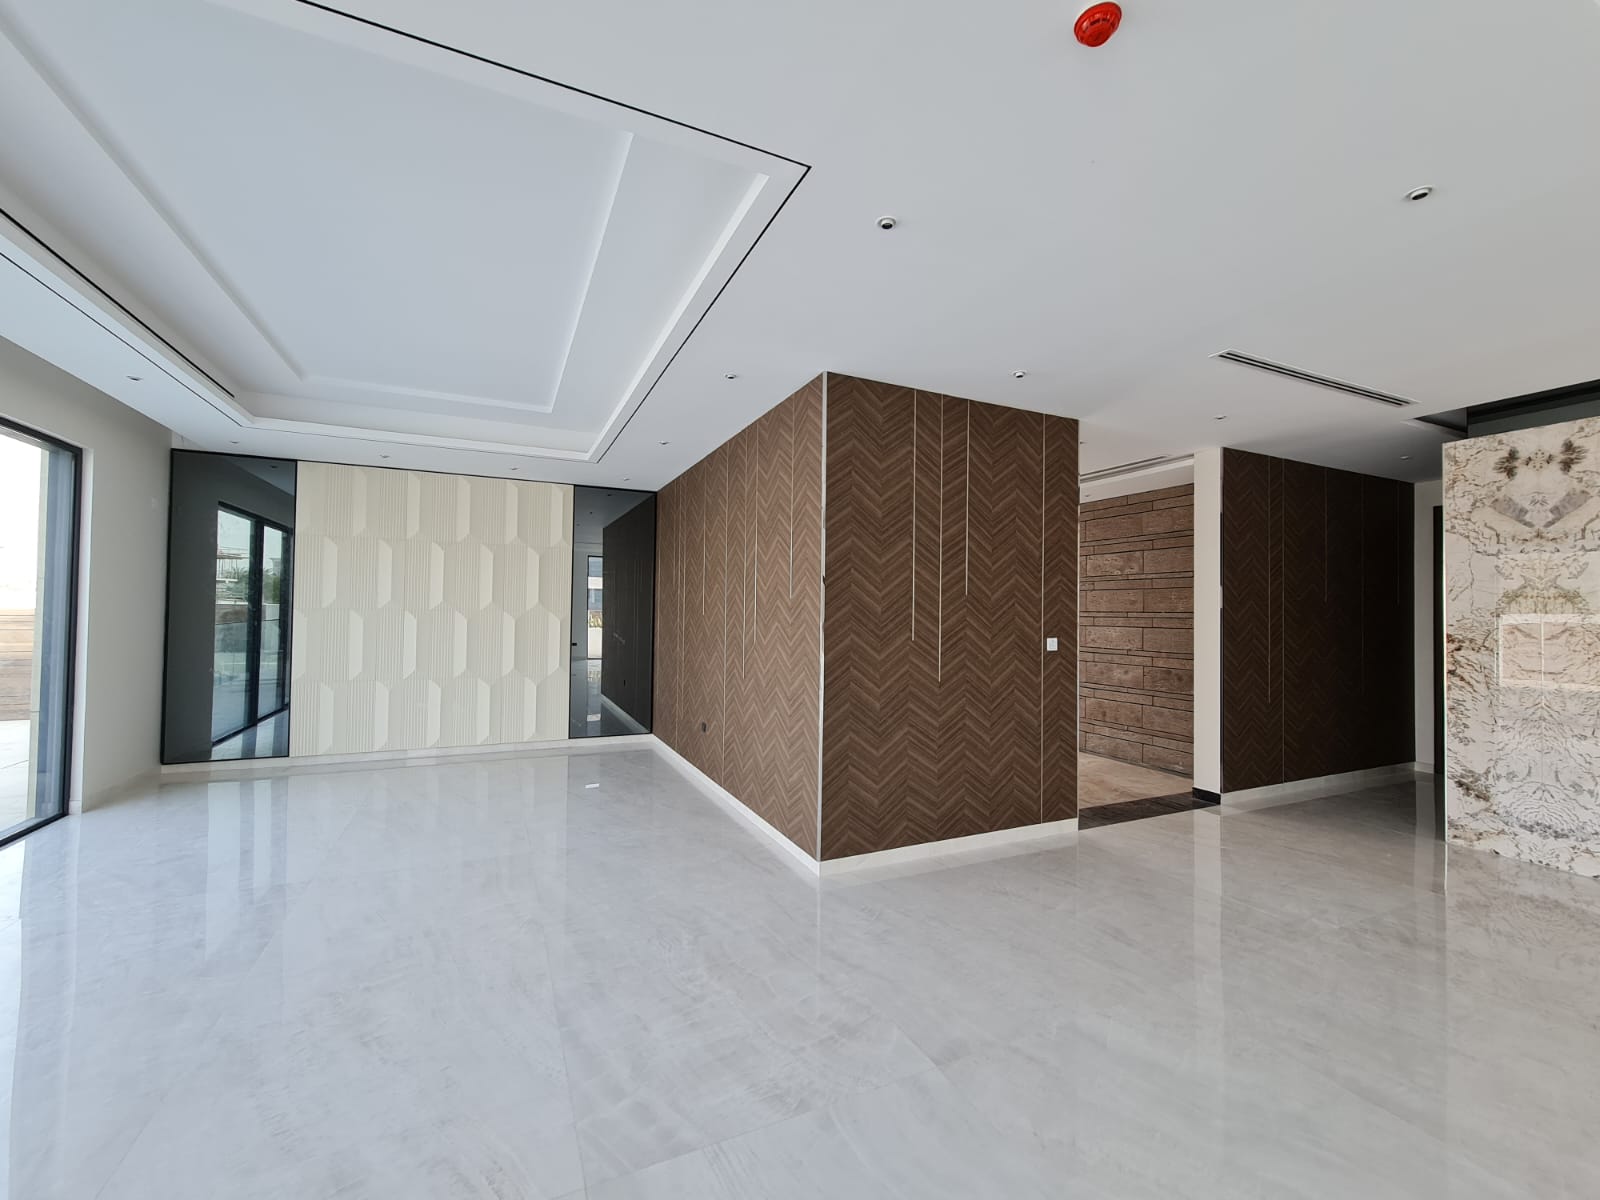 pearle villa office interior design by kandas - best interior designing companies in dubai and uae